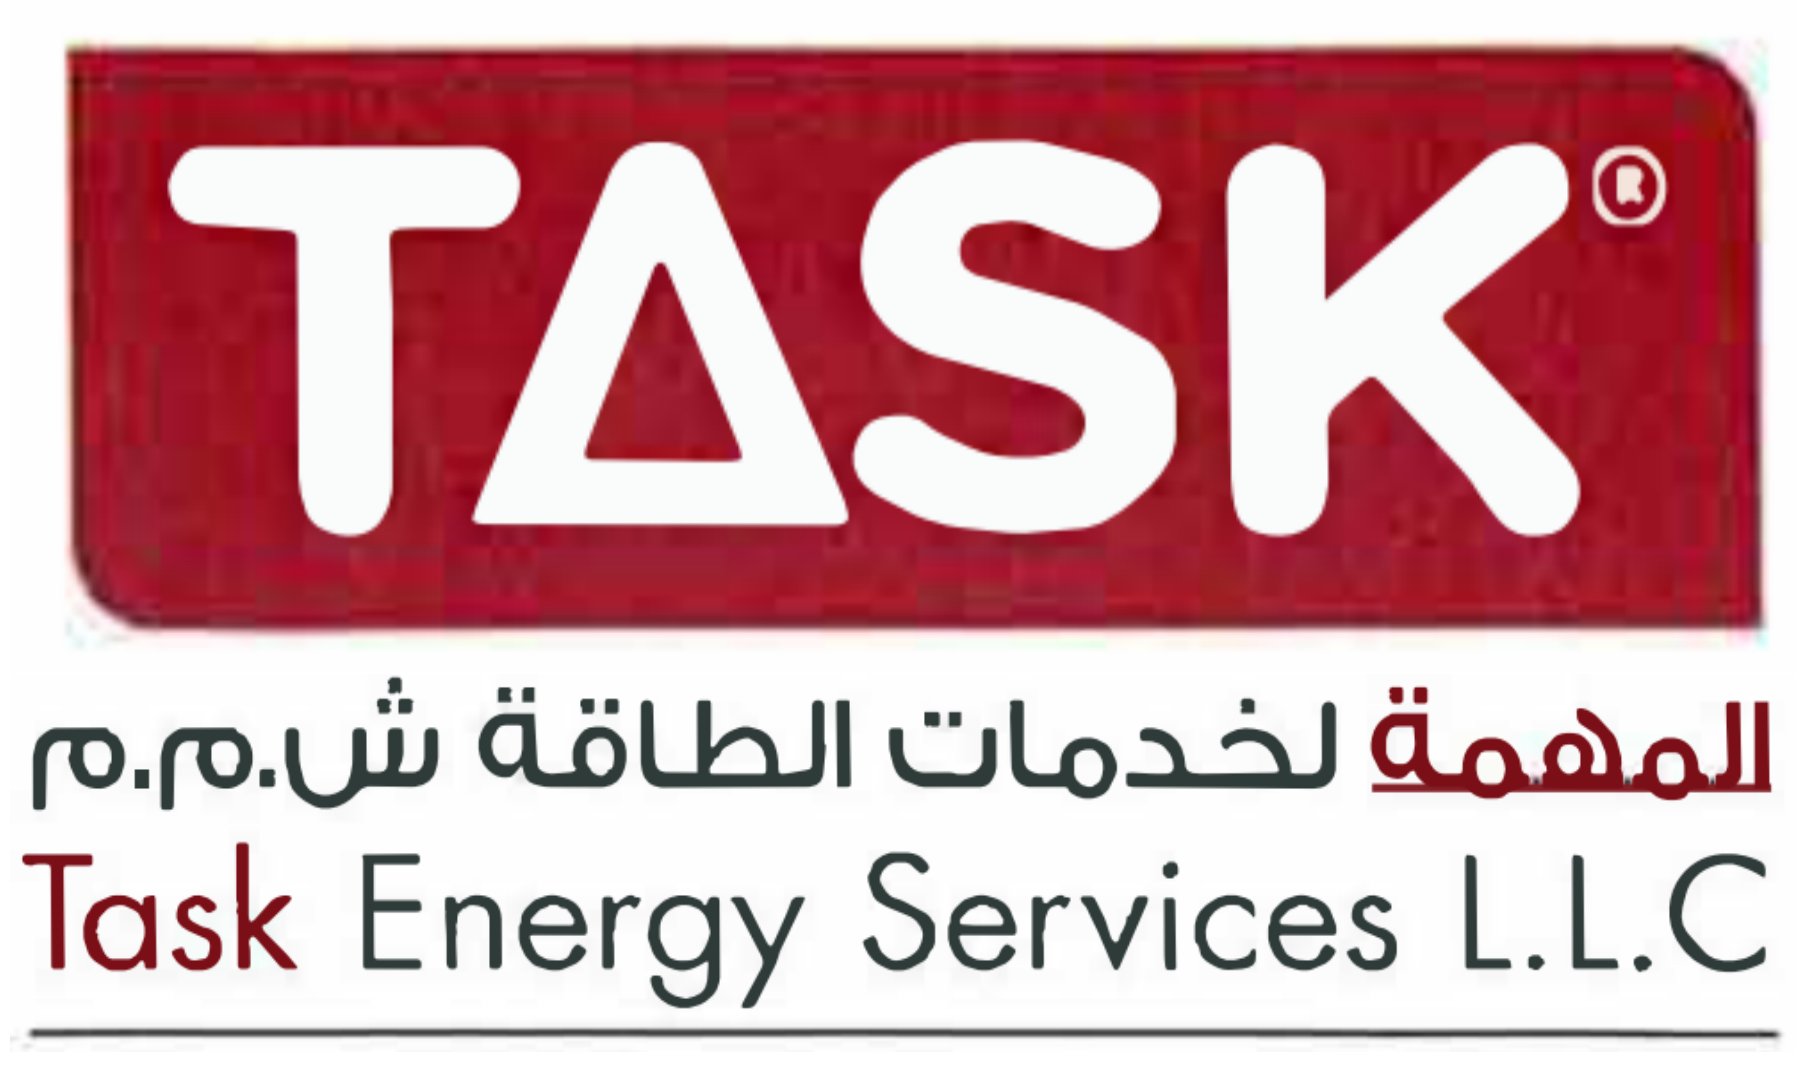 TASK Energy Services LLC